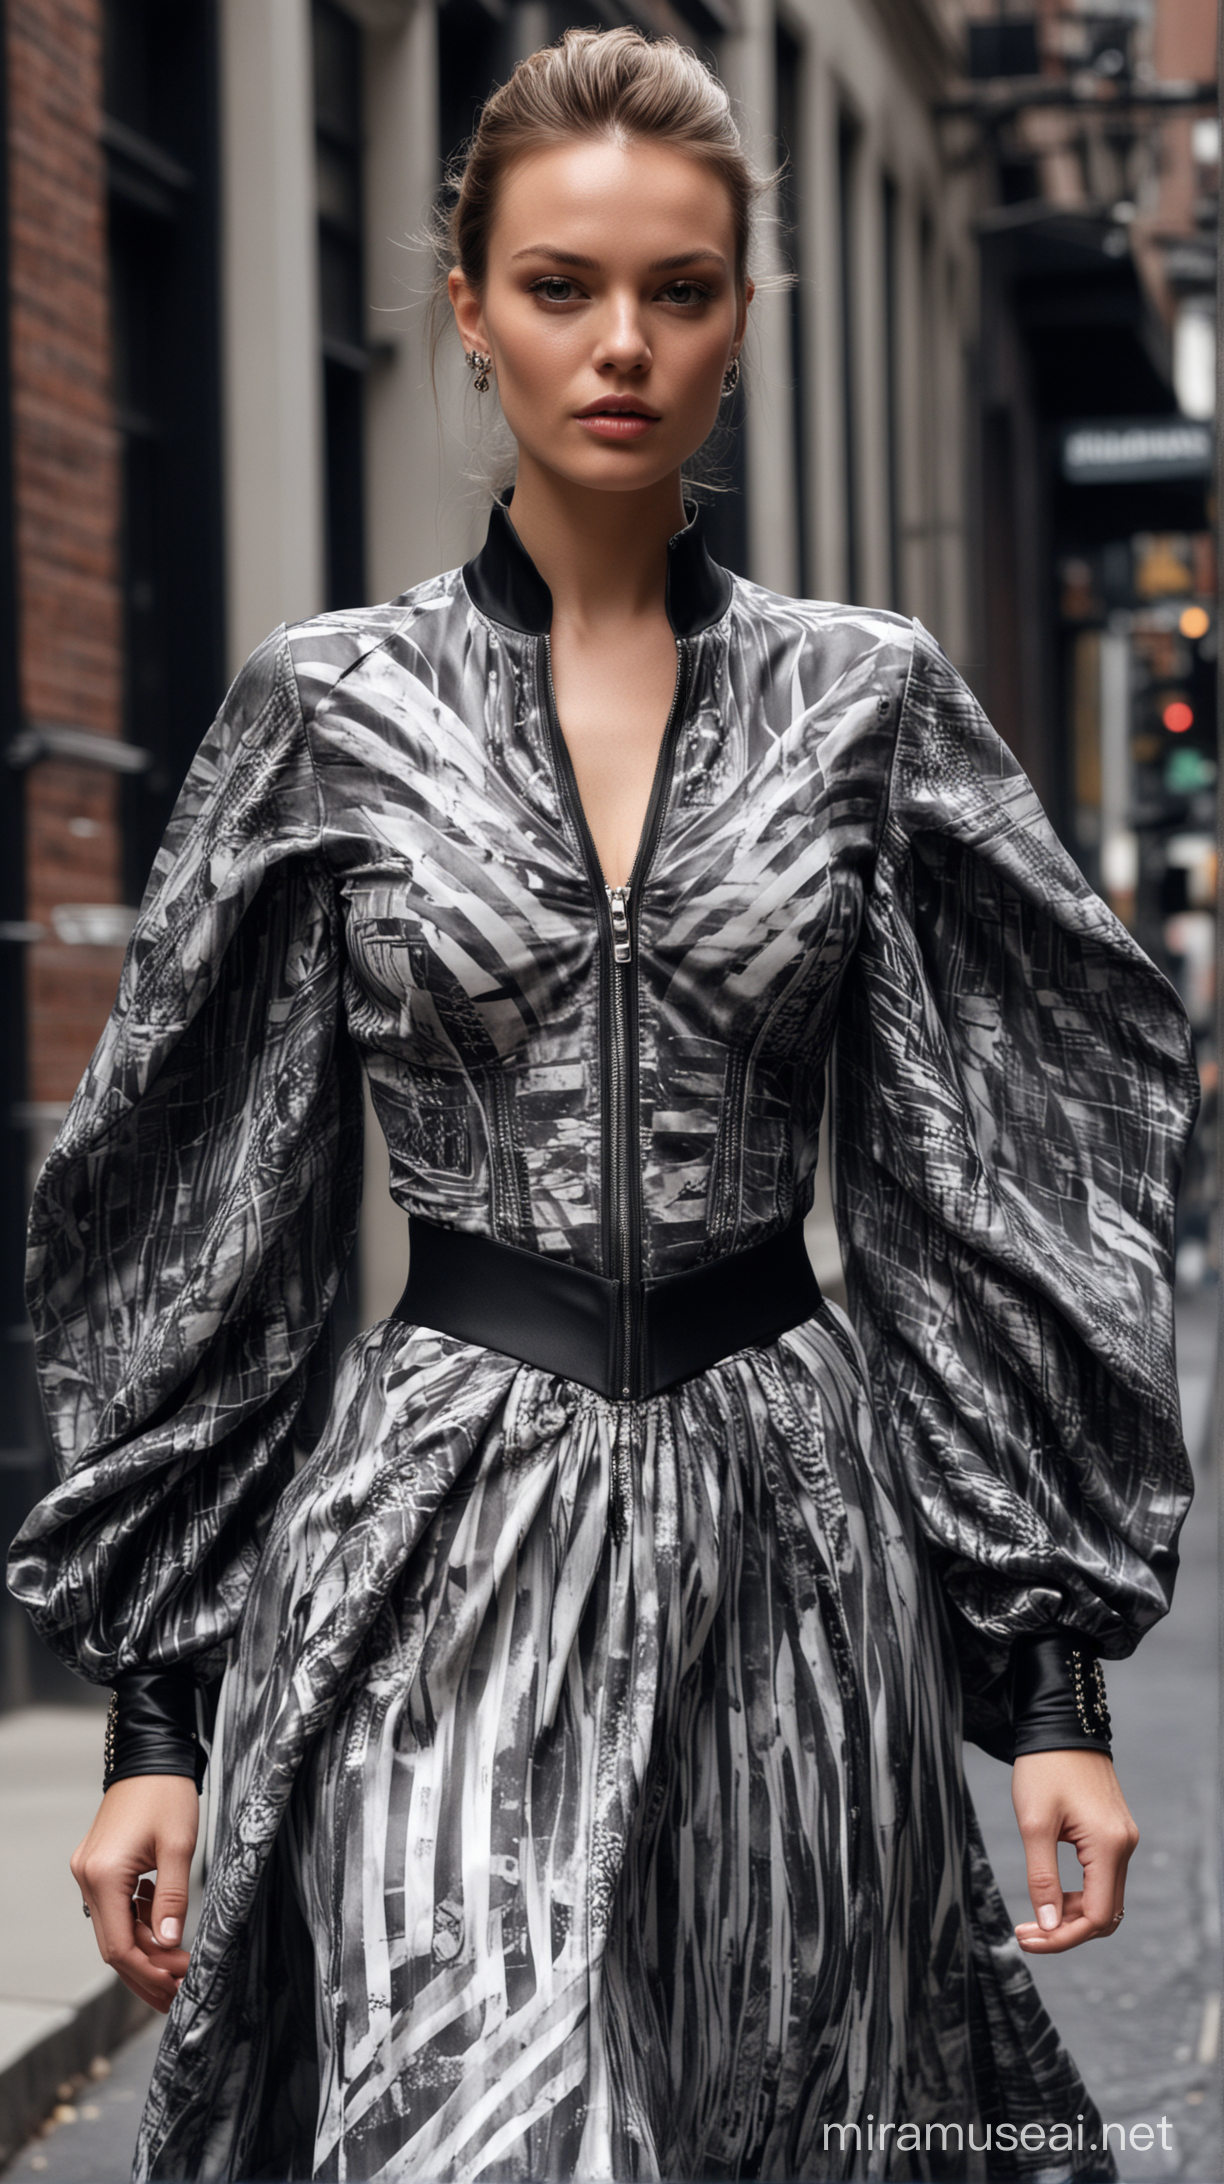 Fashion Model Strutting in NYC HyperRealistic Alexander McQueen Style